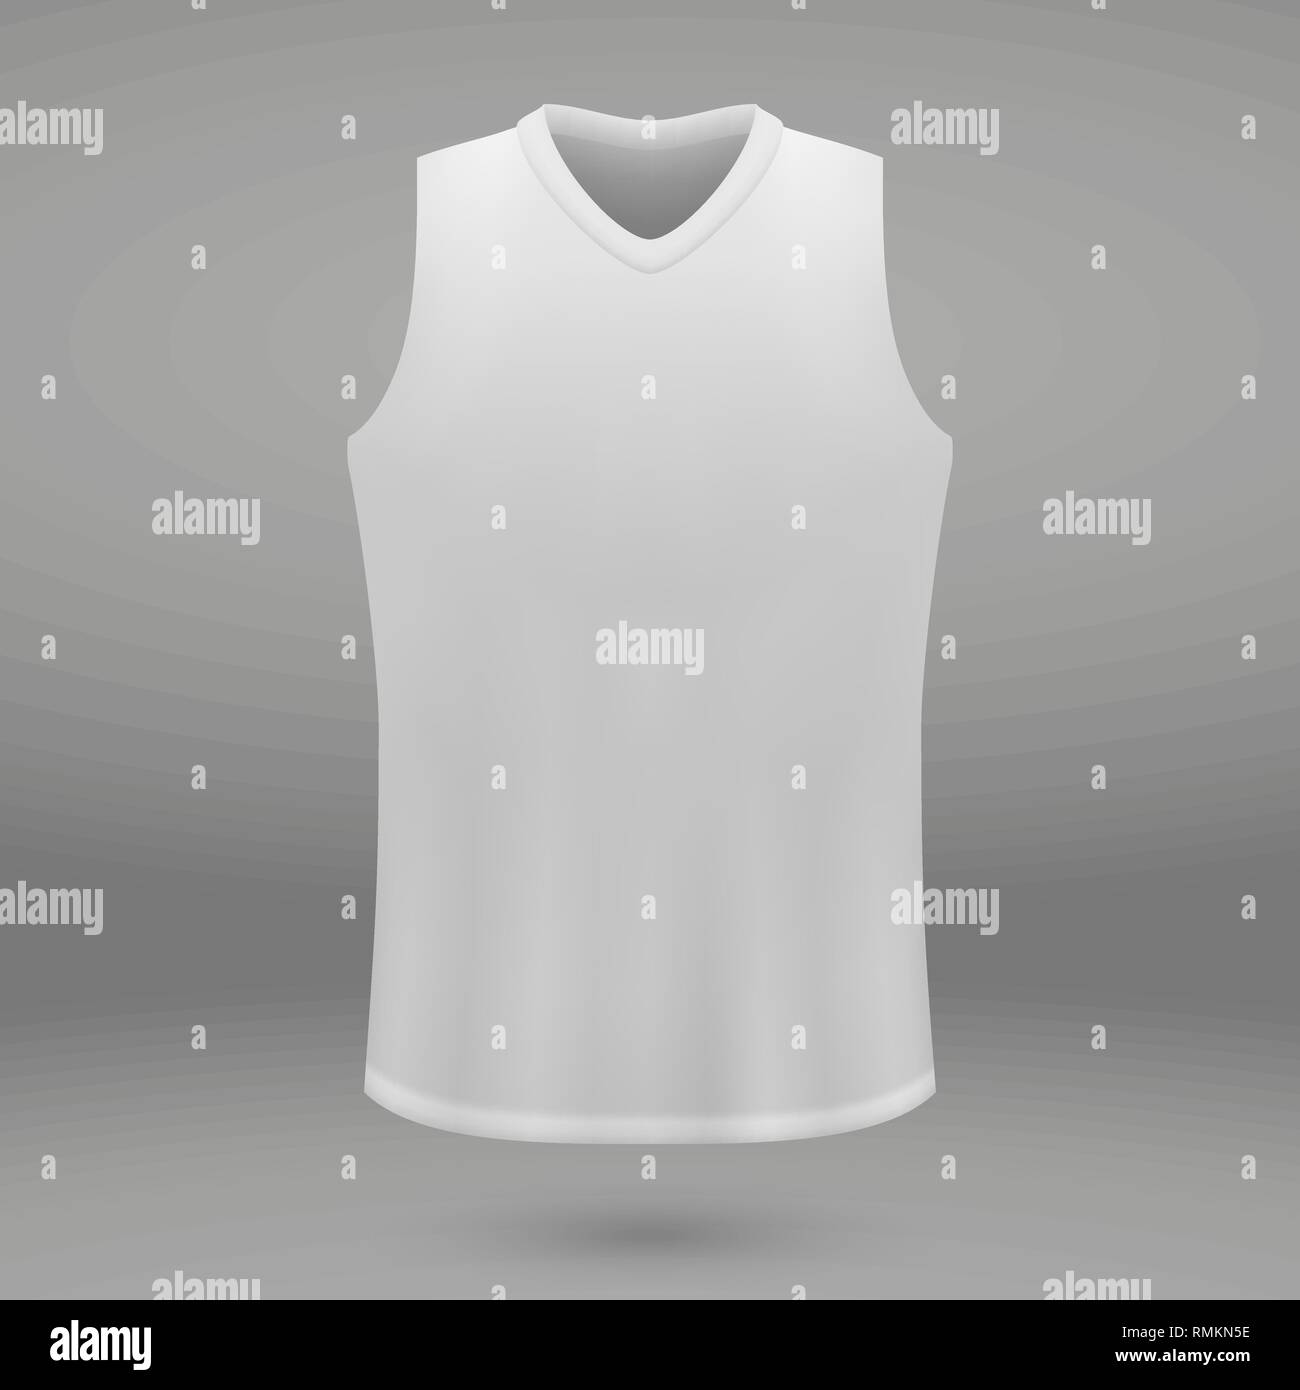 shirt template for basketball jersey. Vector illustration Stock Vector ...